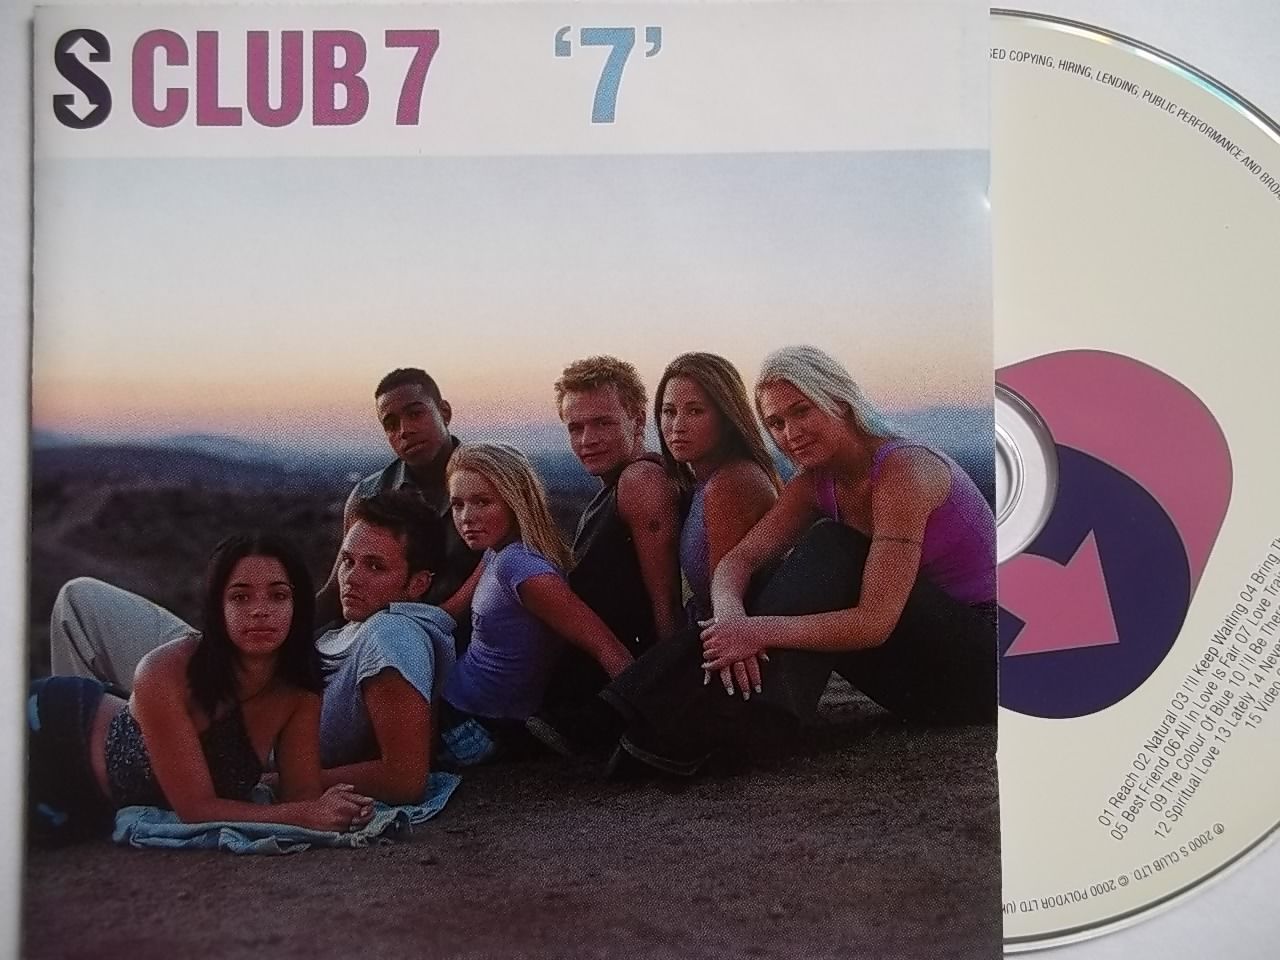 S Club 7 Discography bonus tracks and b-sides download